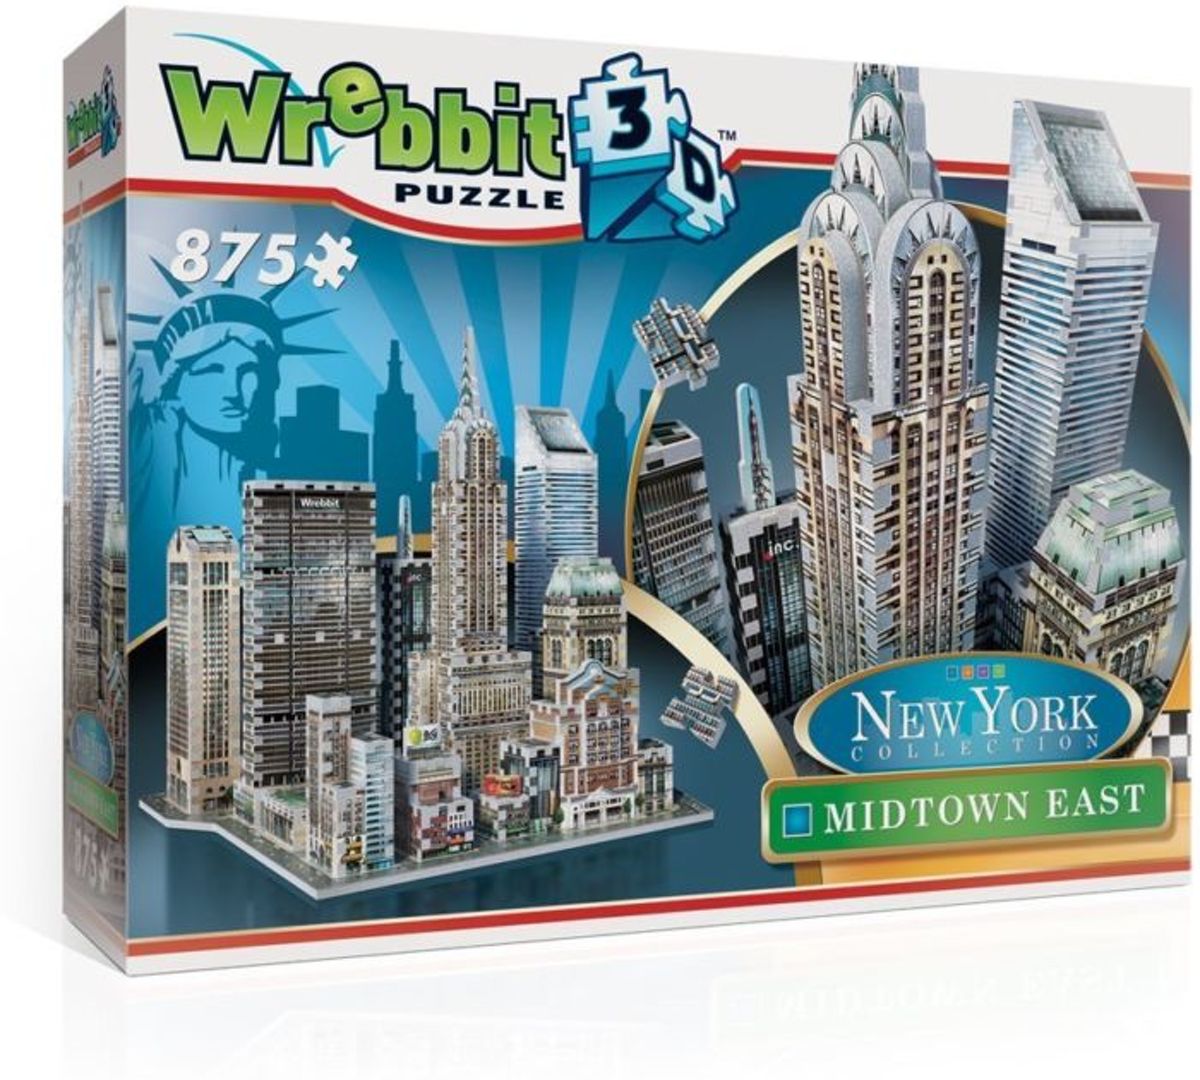 Wrebbit 3D Puzzel - New York Midtown East - 875 stukjes